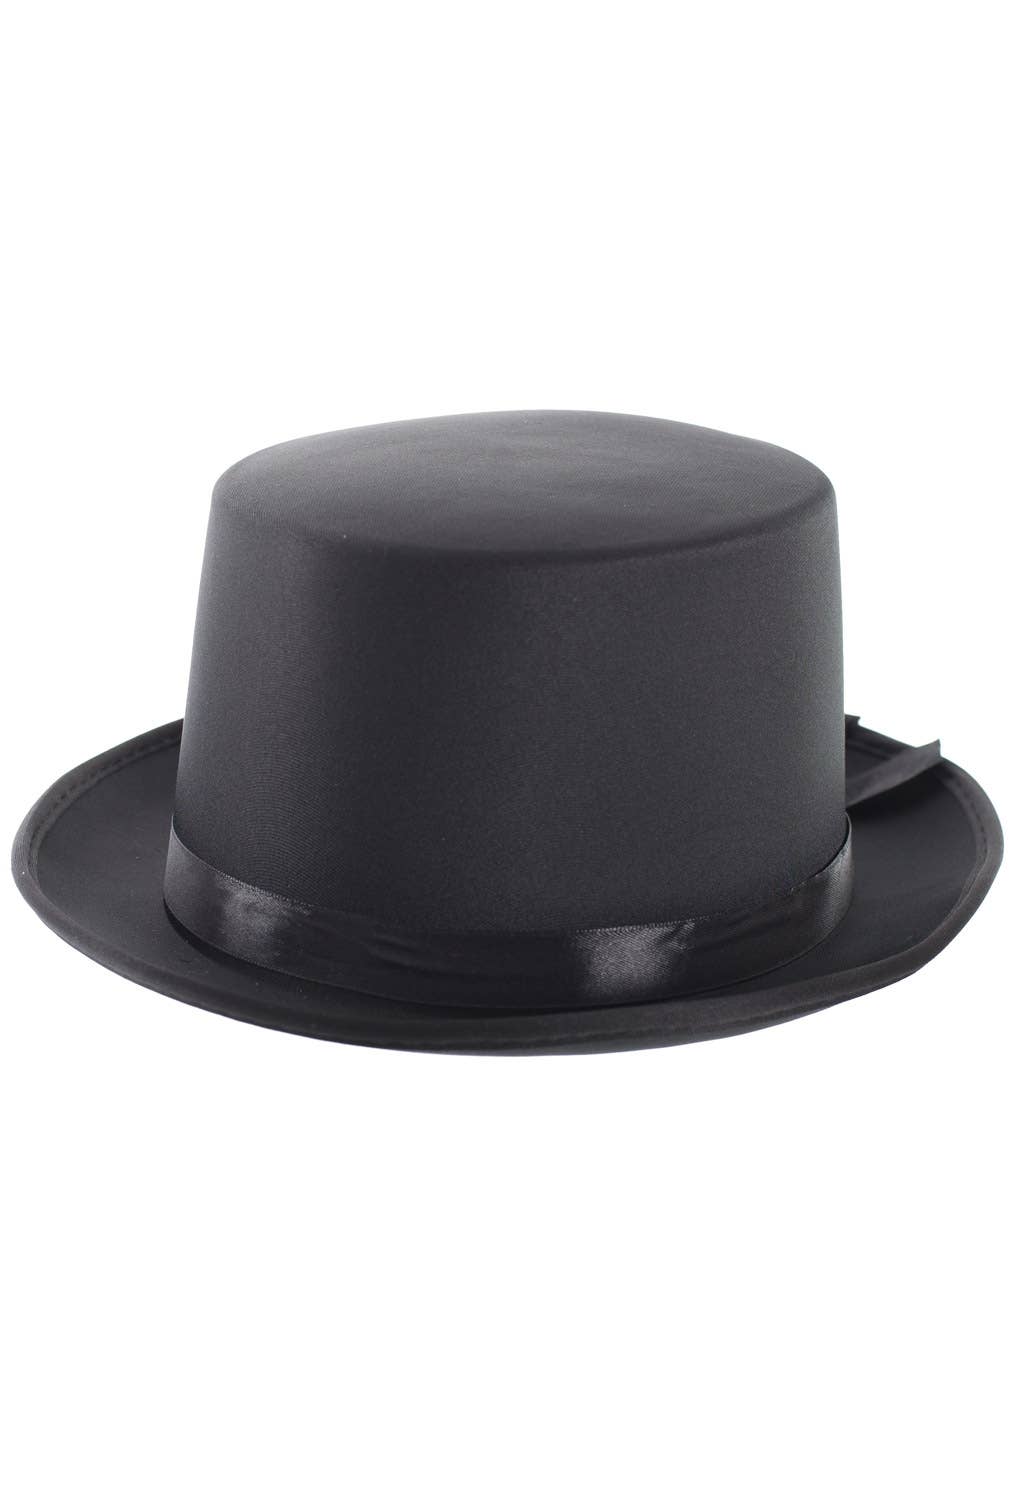 Black Satin Top Hat Fancy Dress Costume Accessory